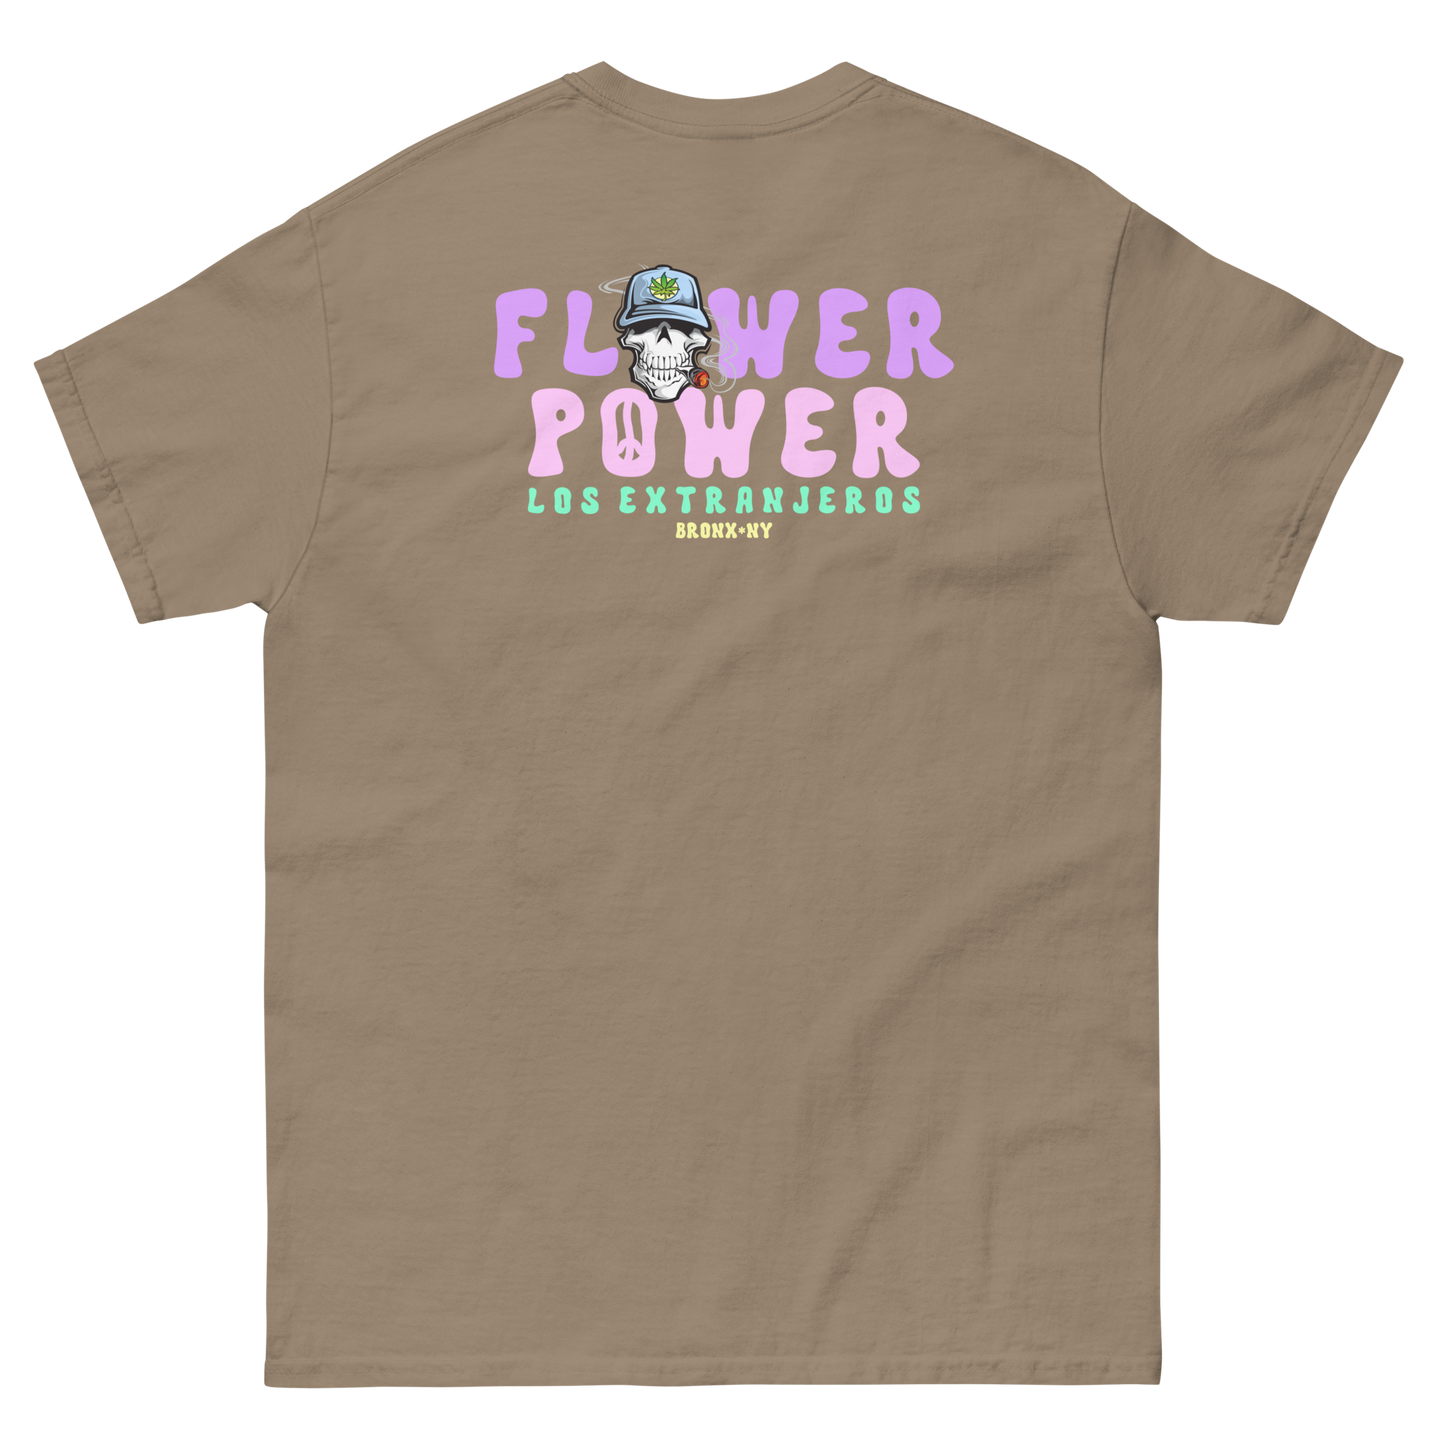 "Flower Power"